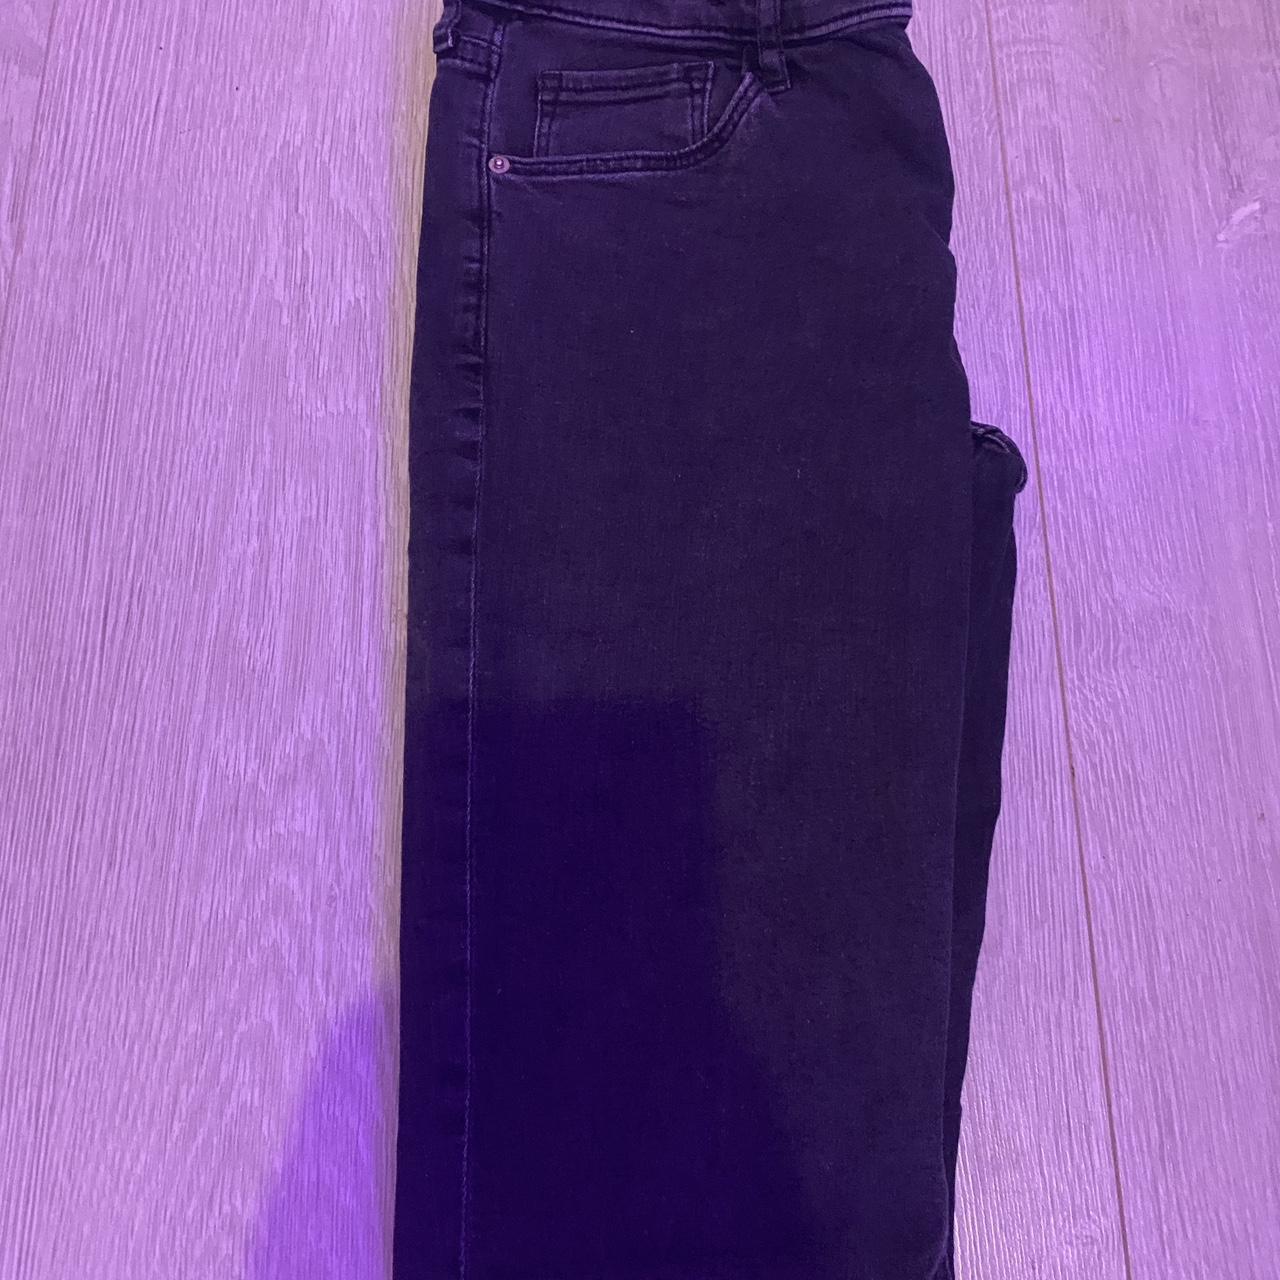 black flare denim jeans, very comfortable, size xs - Depop